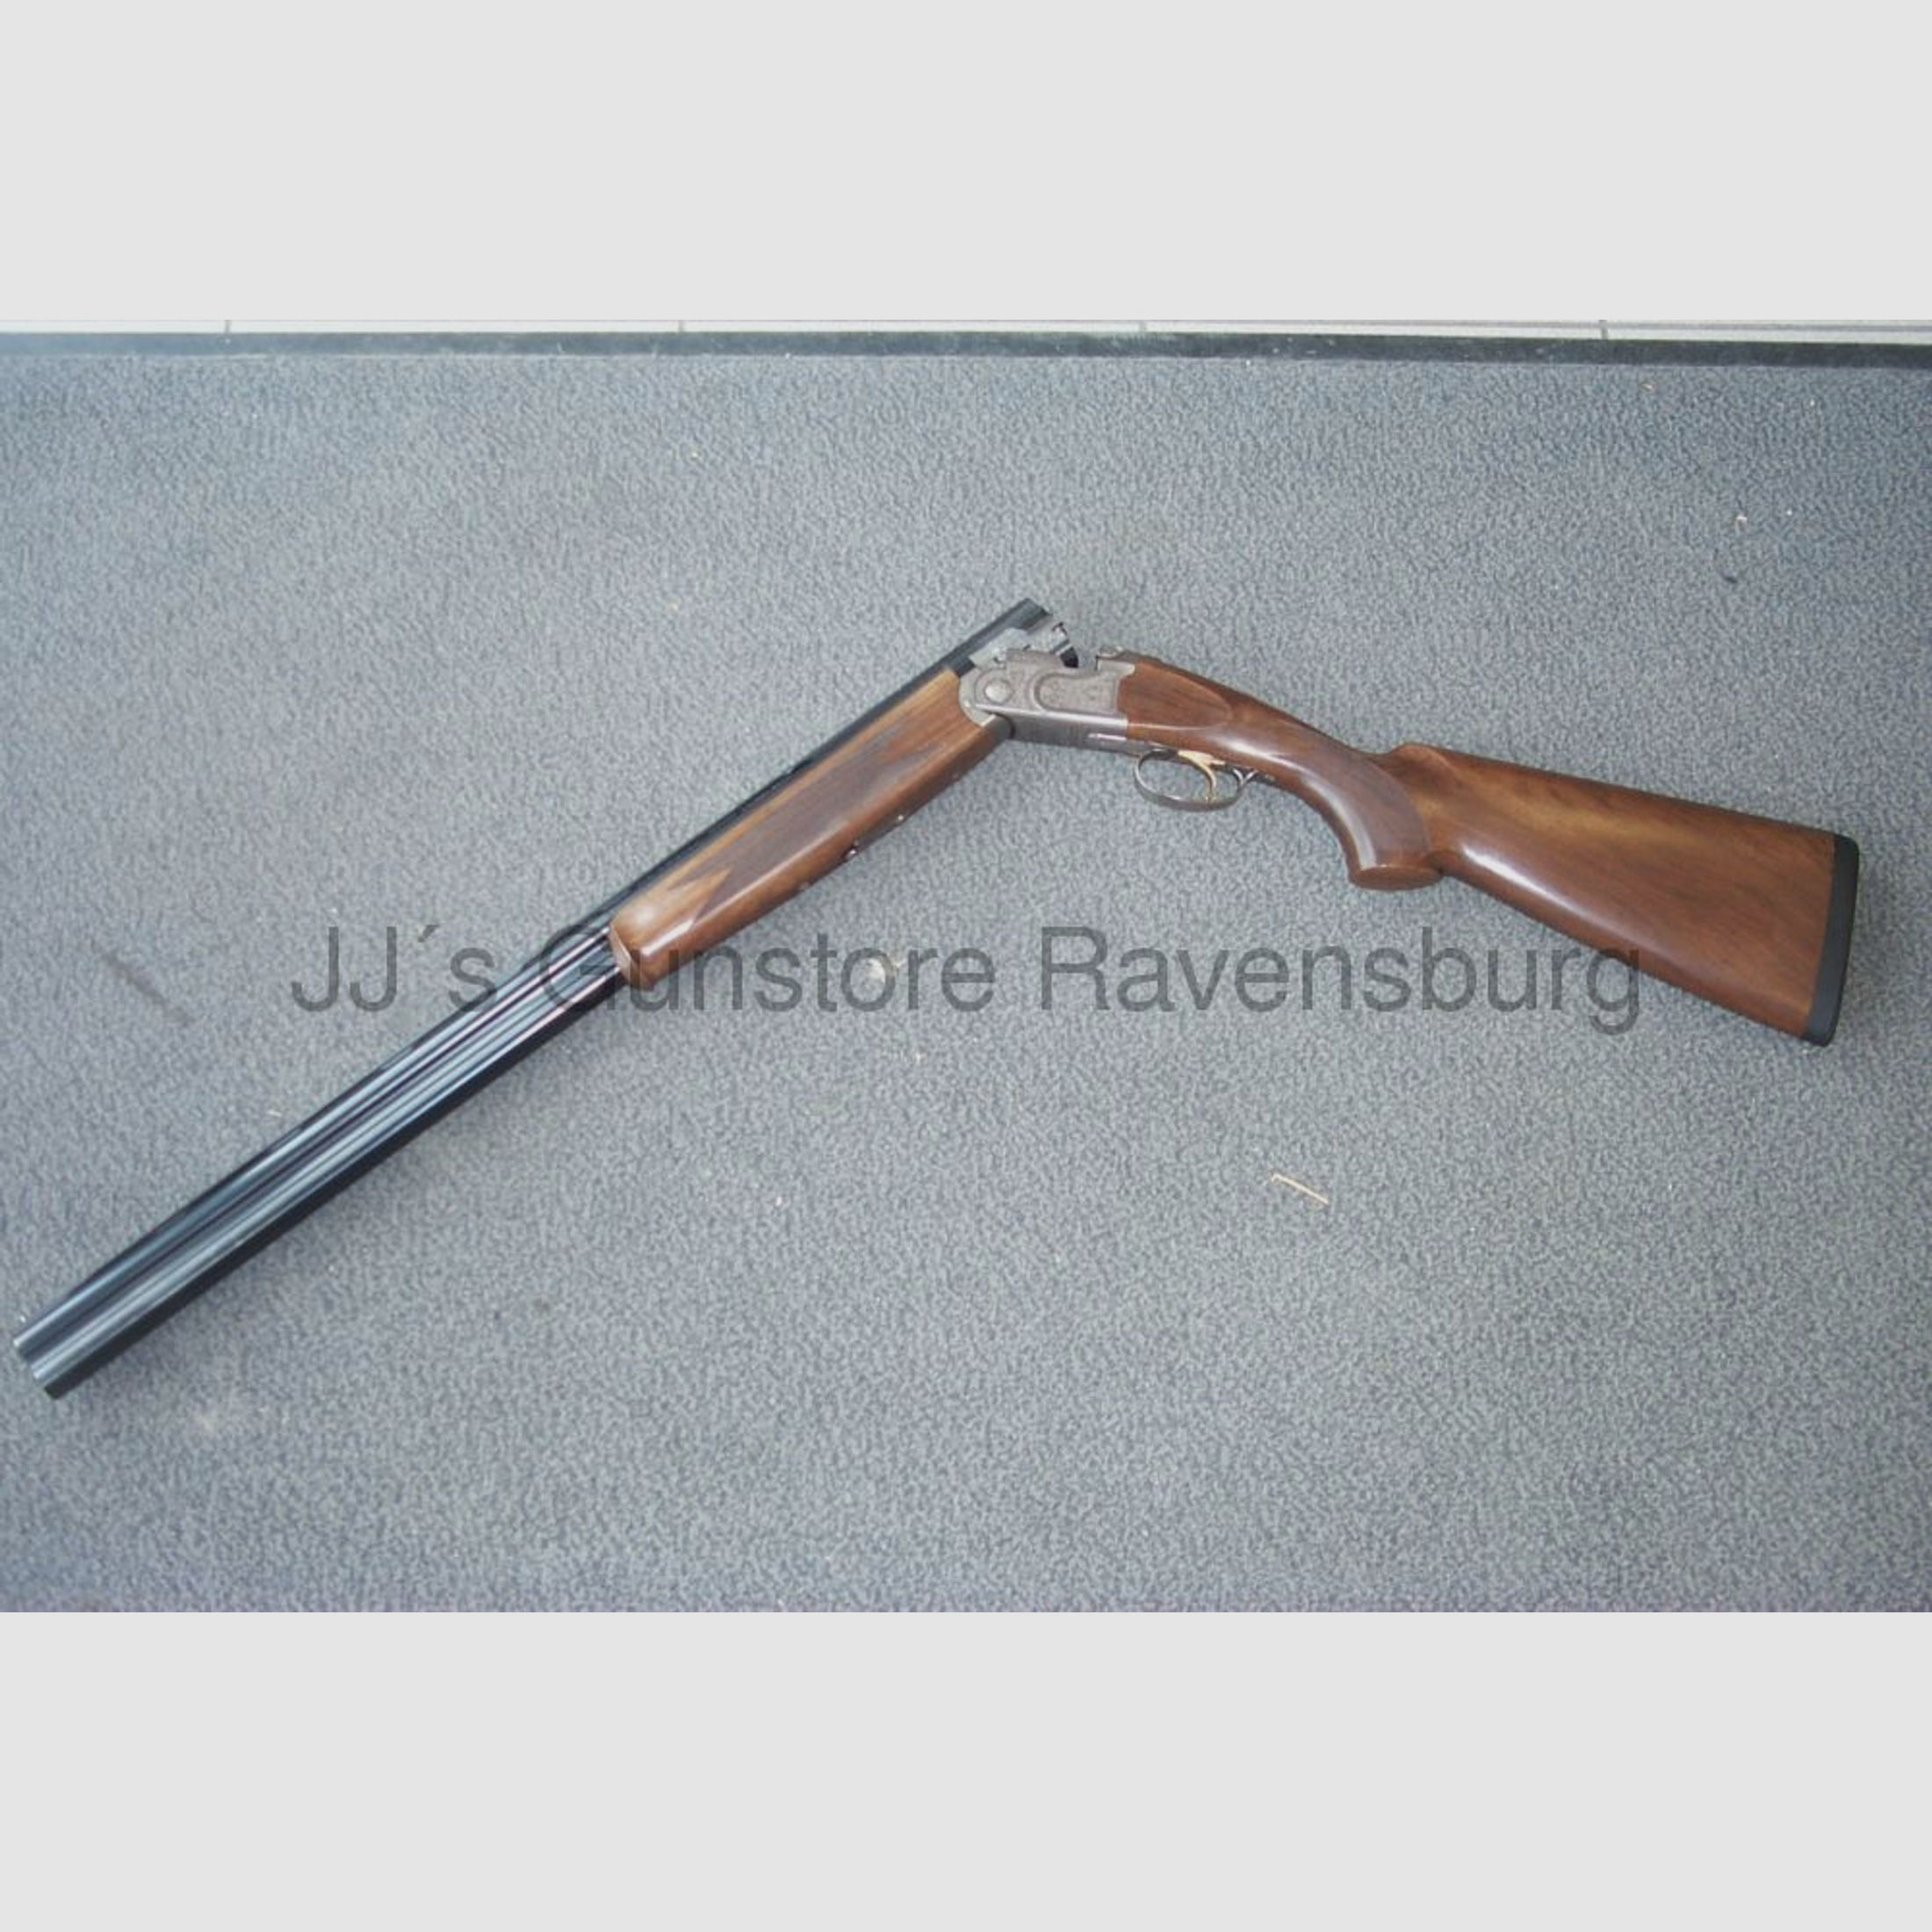 Beretta	 686  Silver Piegon 1 Jagd 12/76 - Picture0001.JPG,Picture0001.JPG